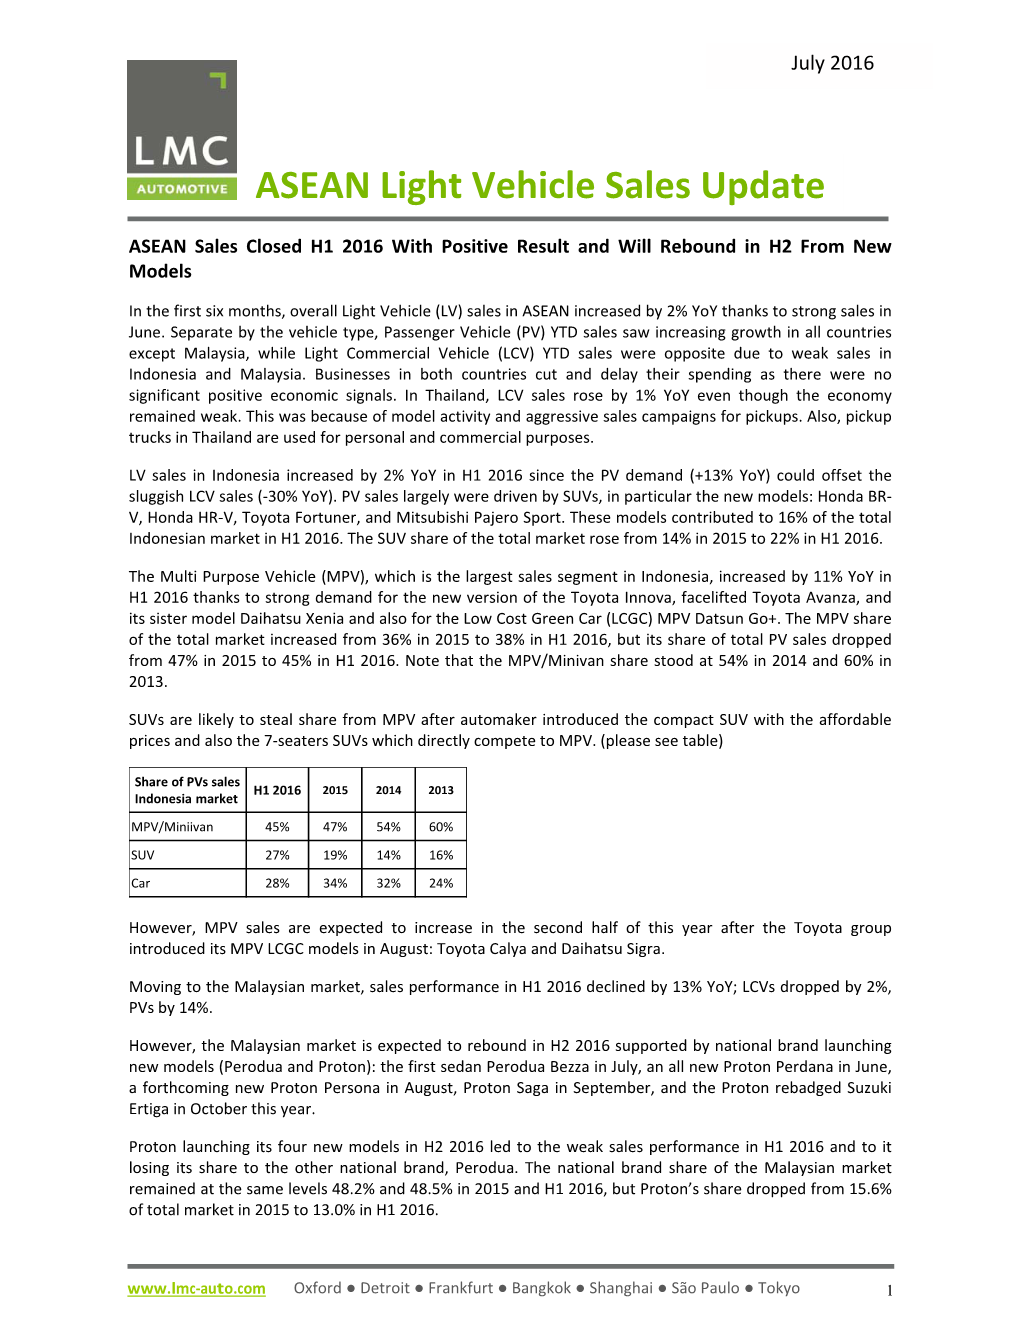 ASEAN Light Vehicle Sales Update